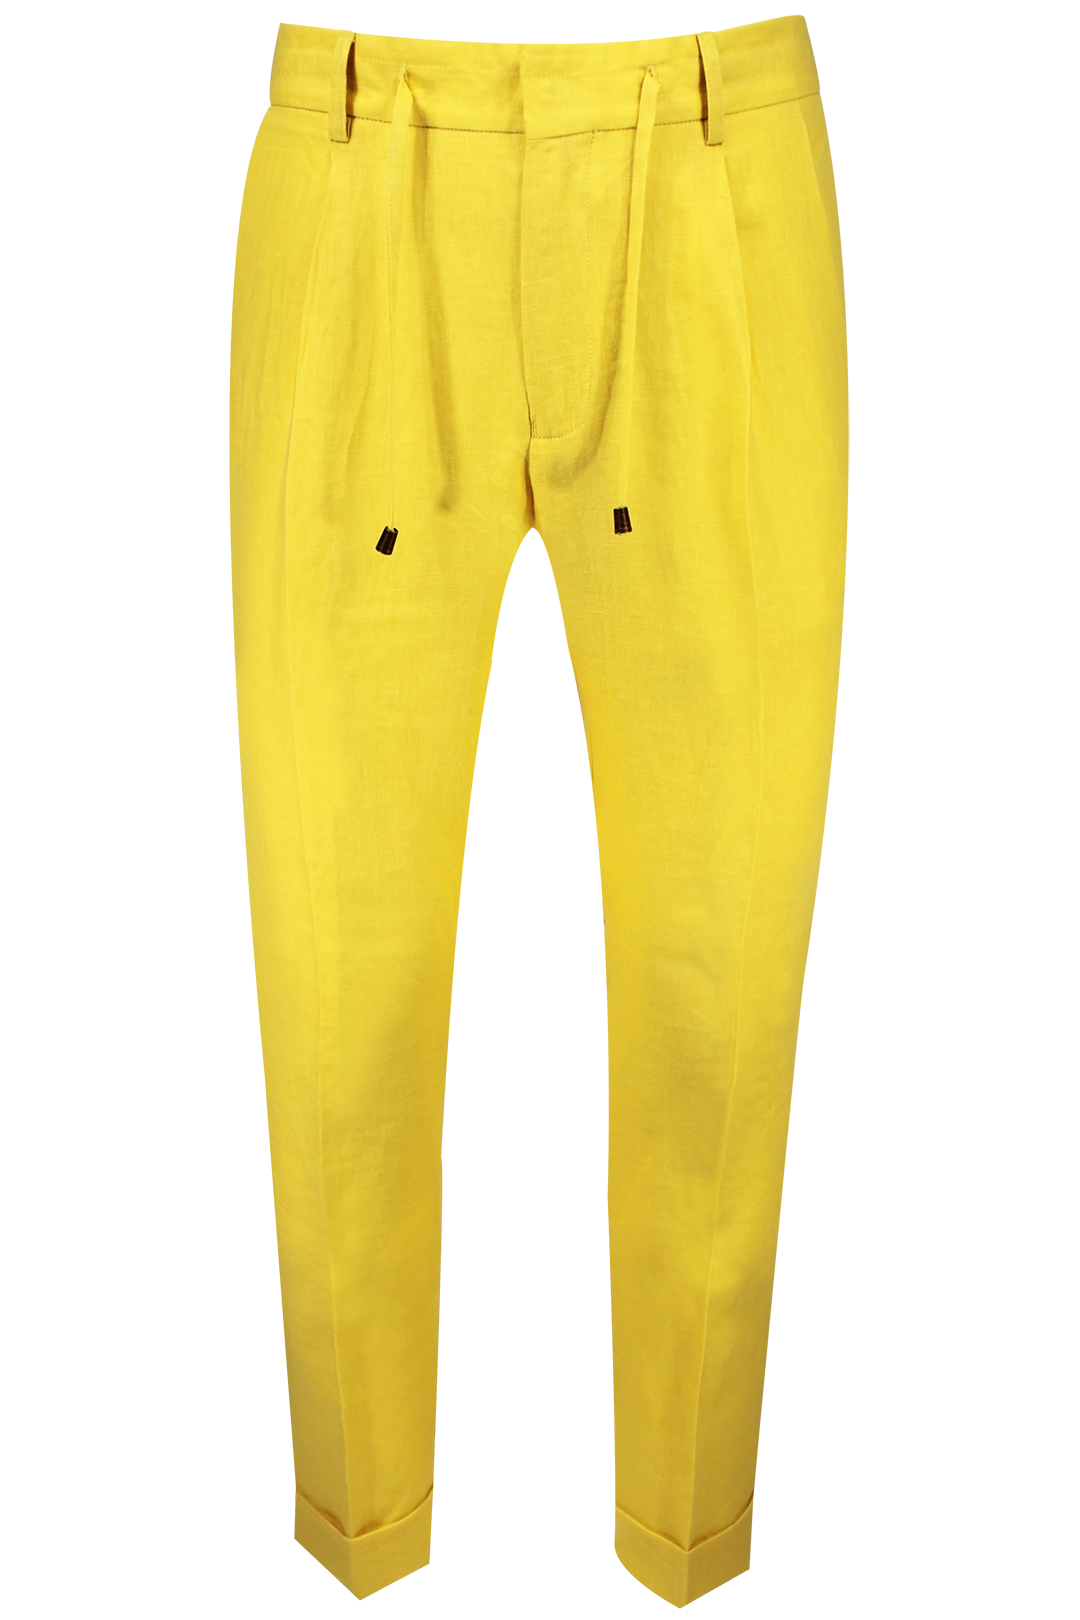 Pantalone con due pince e coulisse in lino giallo